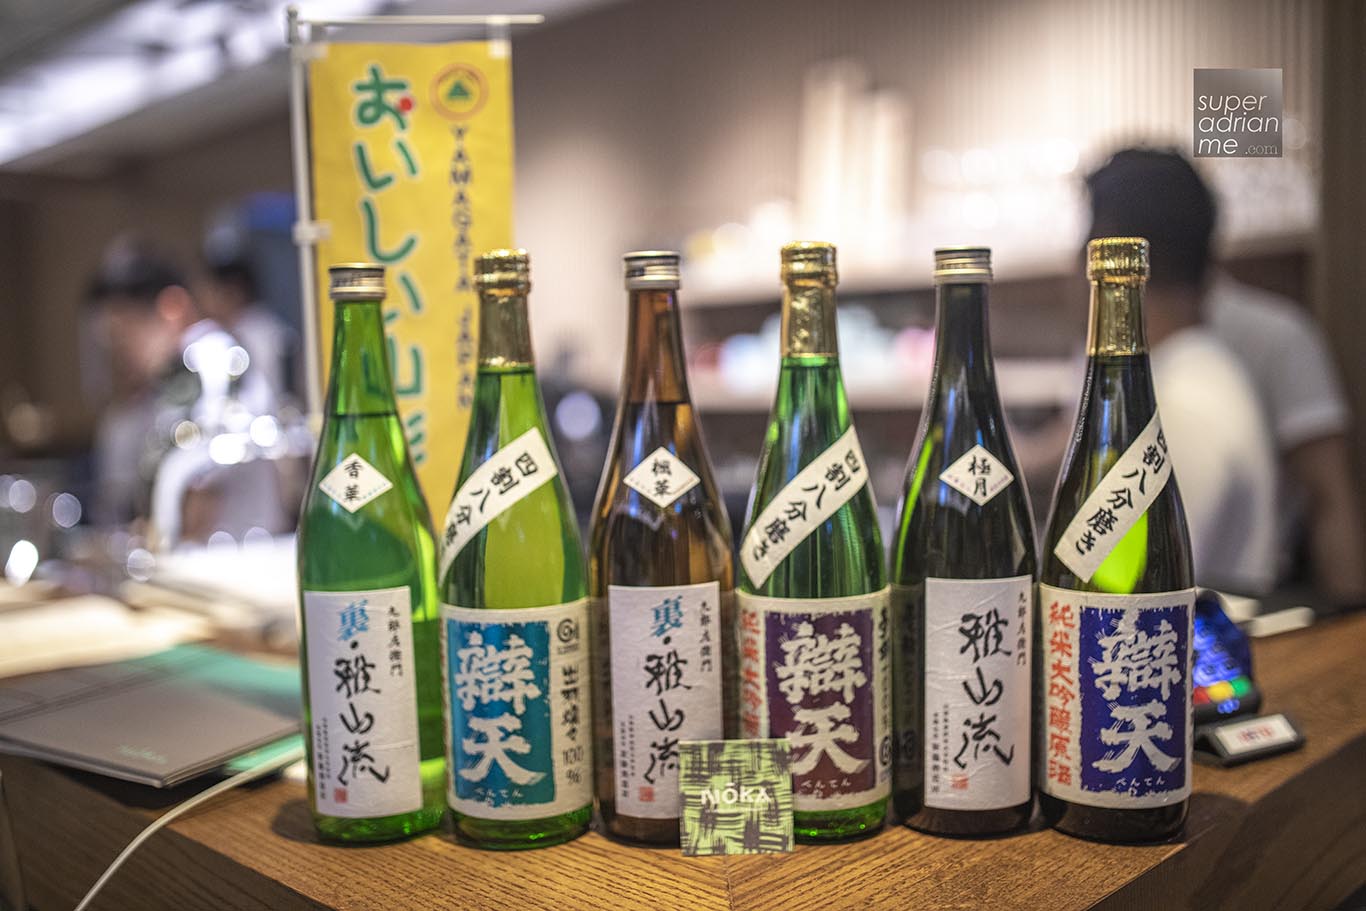 Yamagata Prefecture Sakes - Benten Brewery and Shindo Brewery